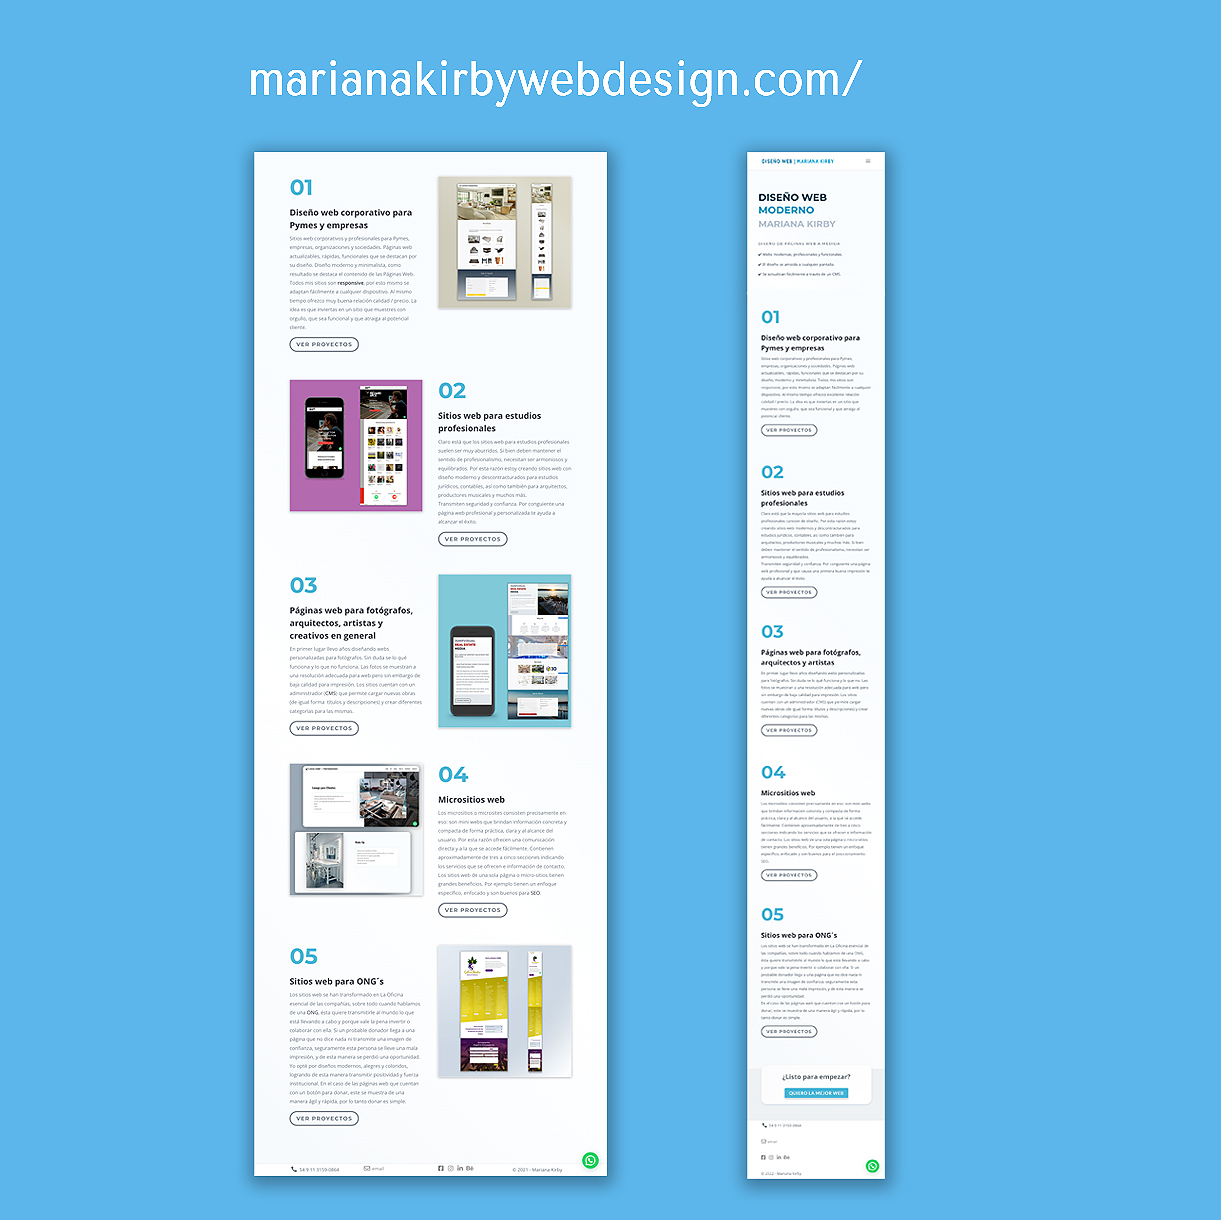 (c) Marianakirbywebdesign.com